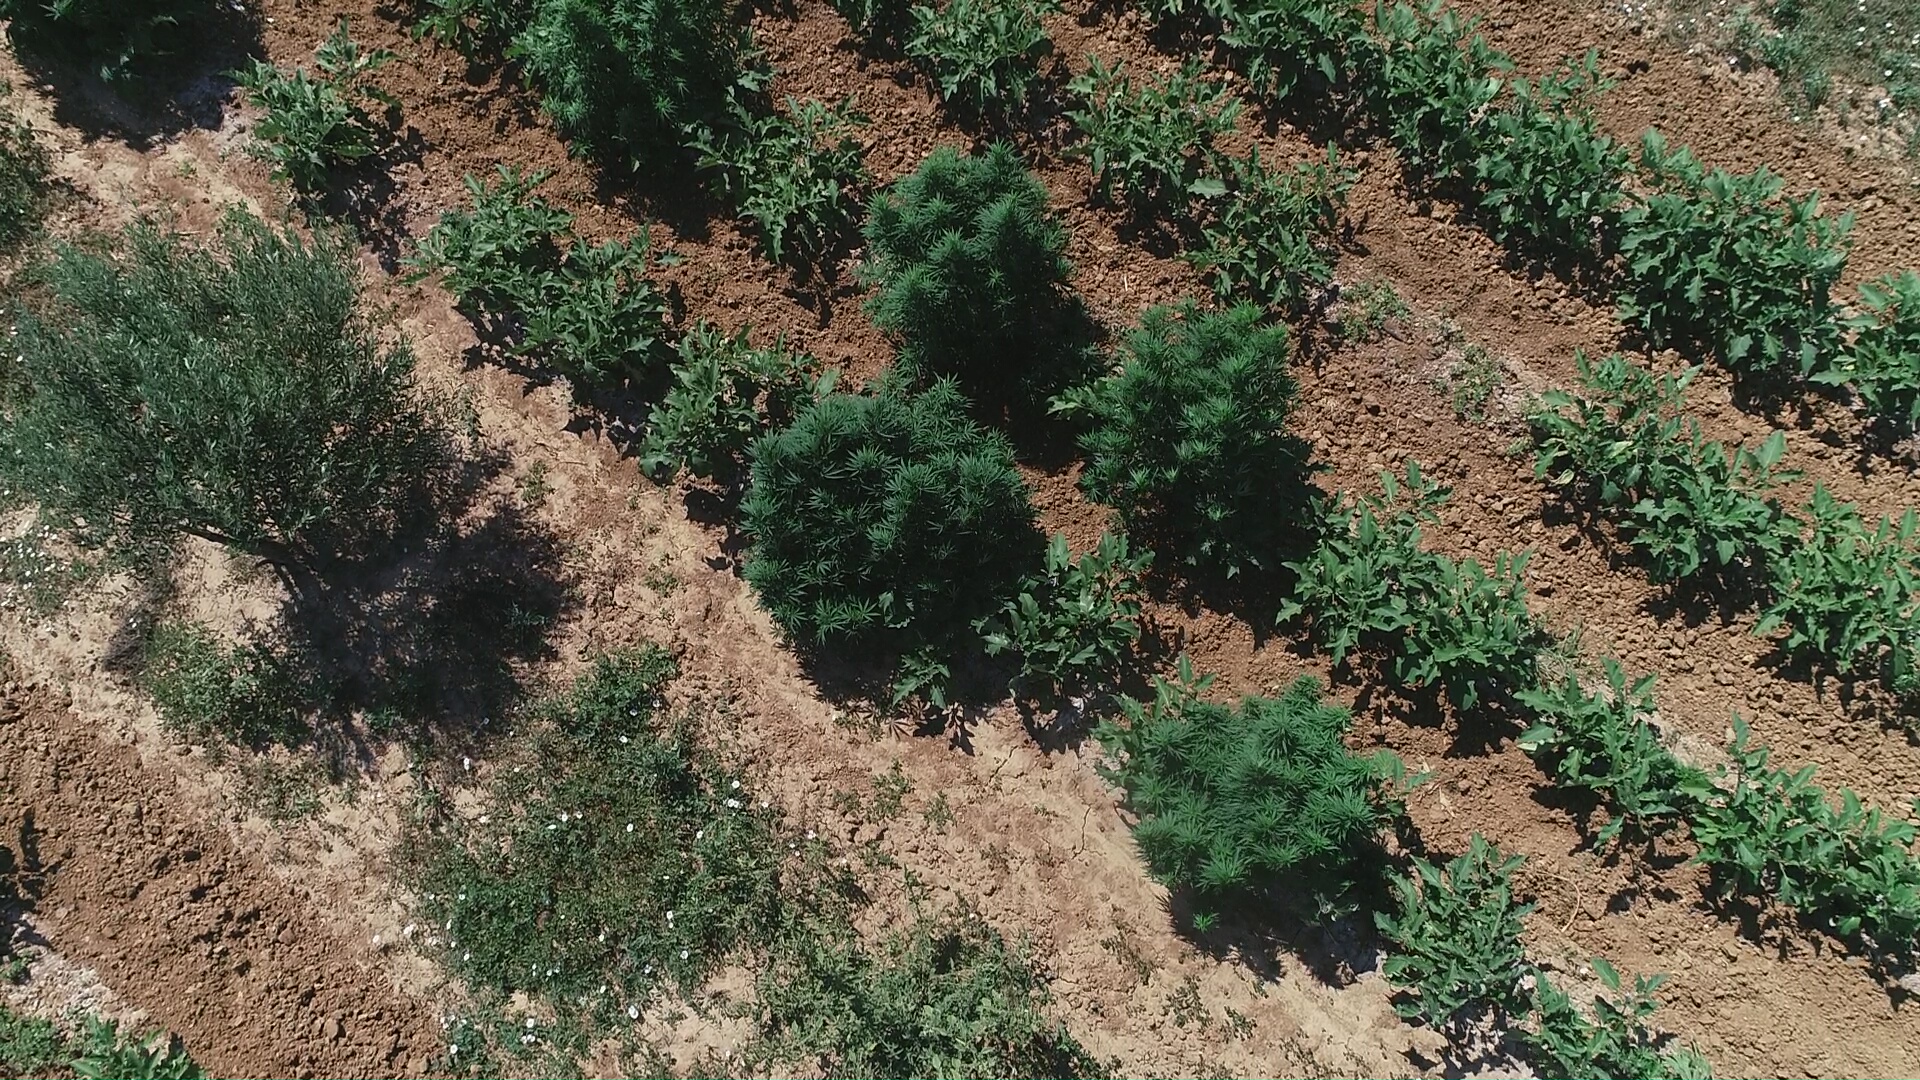 Trovate oltre 400 piante di marijuana in località Brancasi a Brindisi